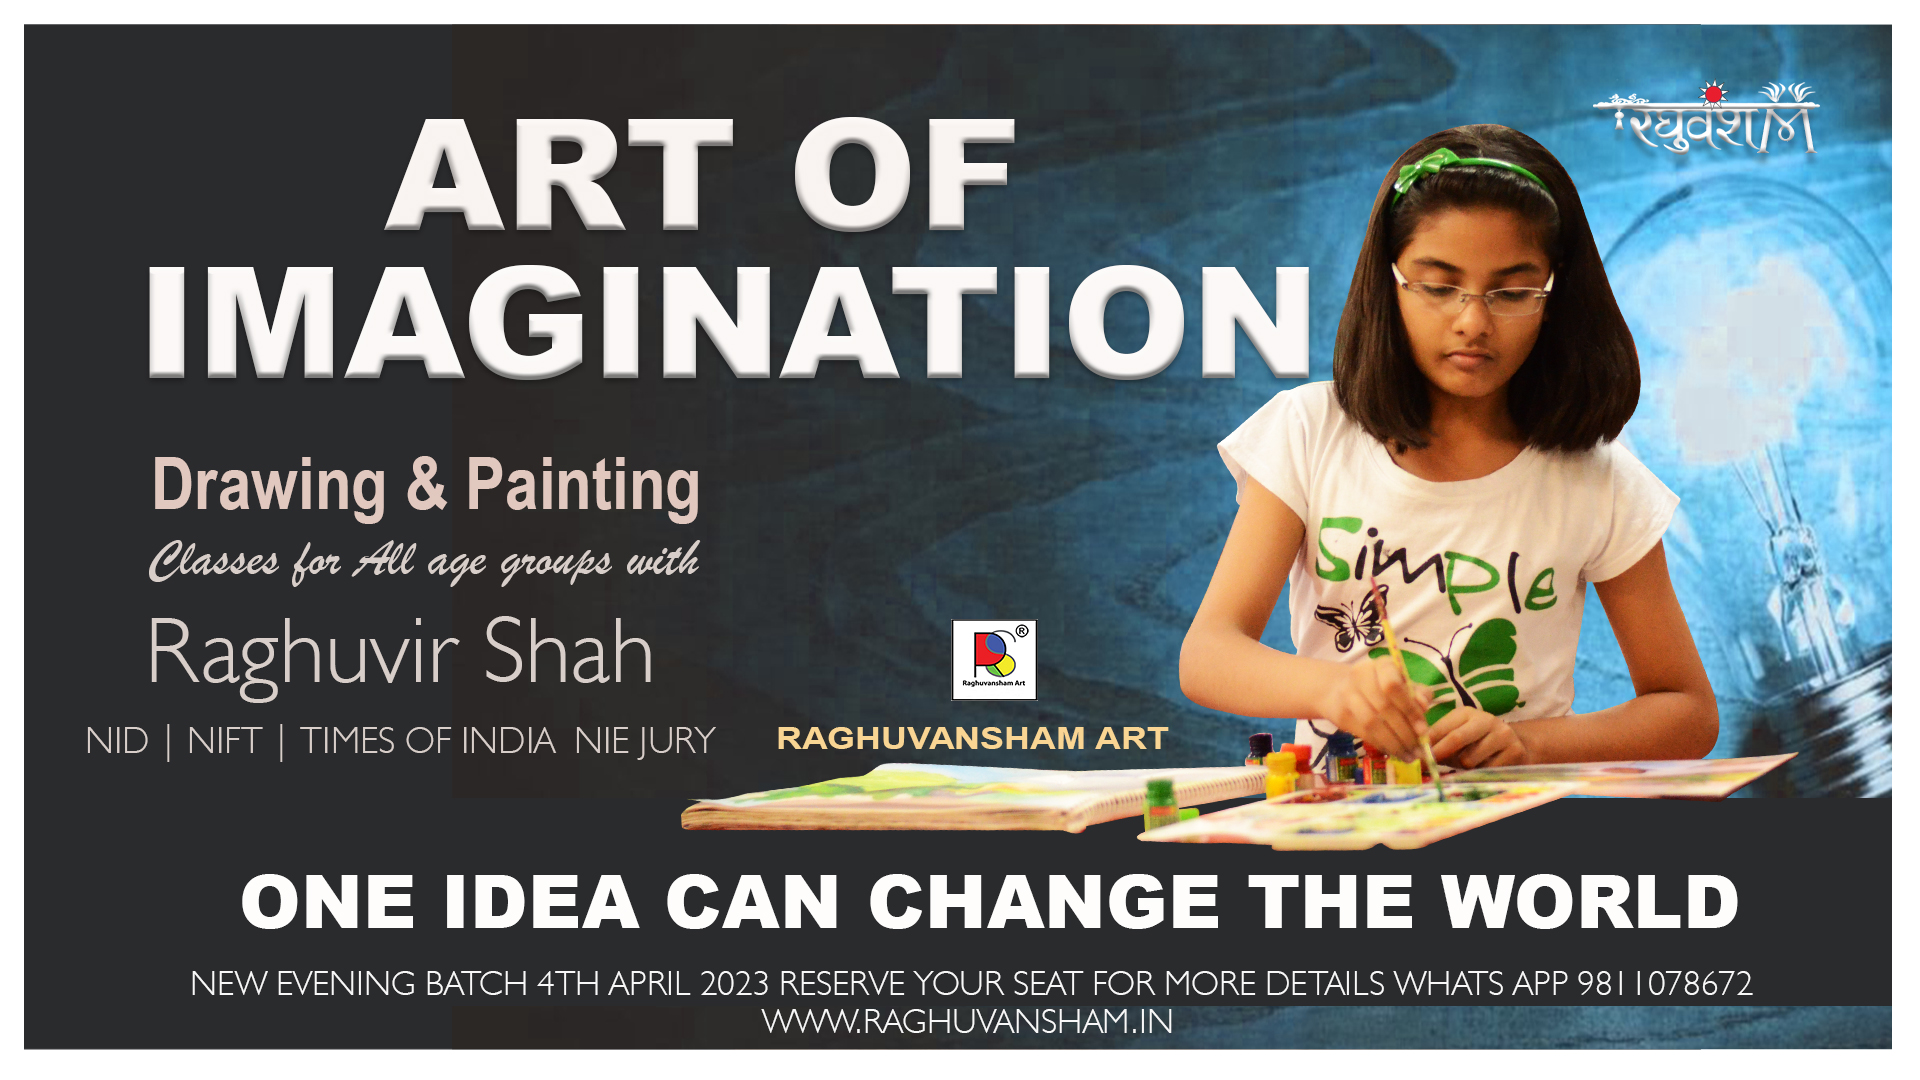 Art of Imagination with Raghuvir Shah SirEventsWorkshops - SeminarsWest DelhiPunjabi Bagh